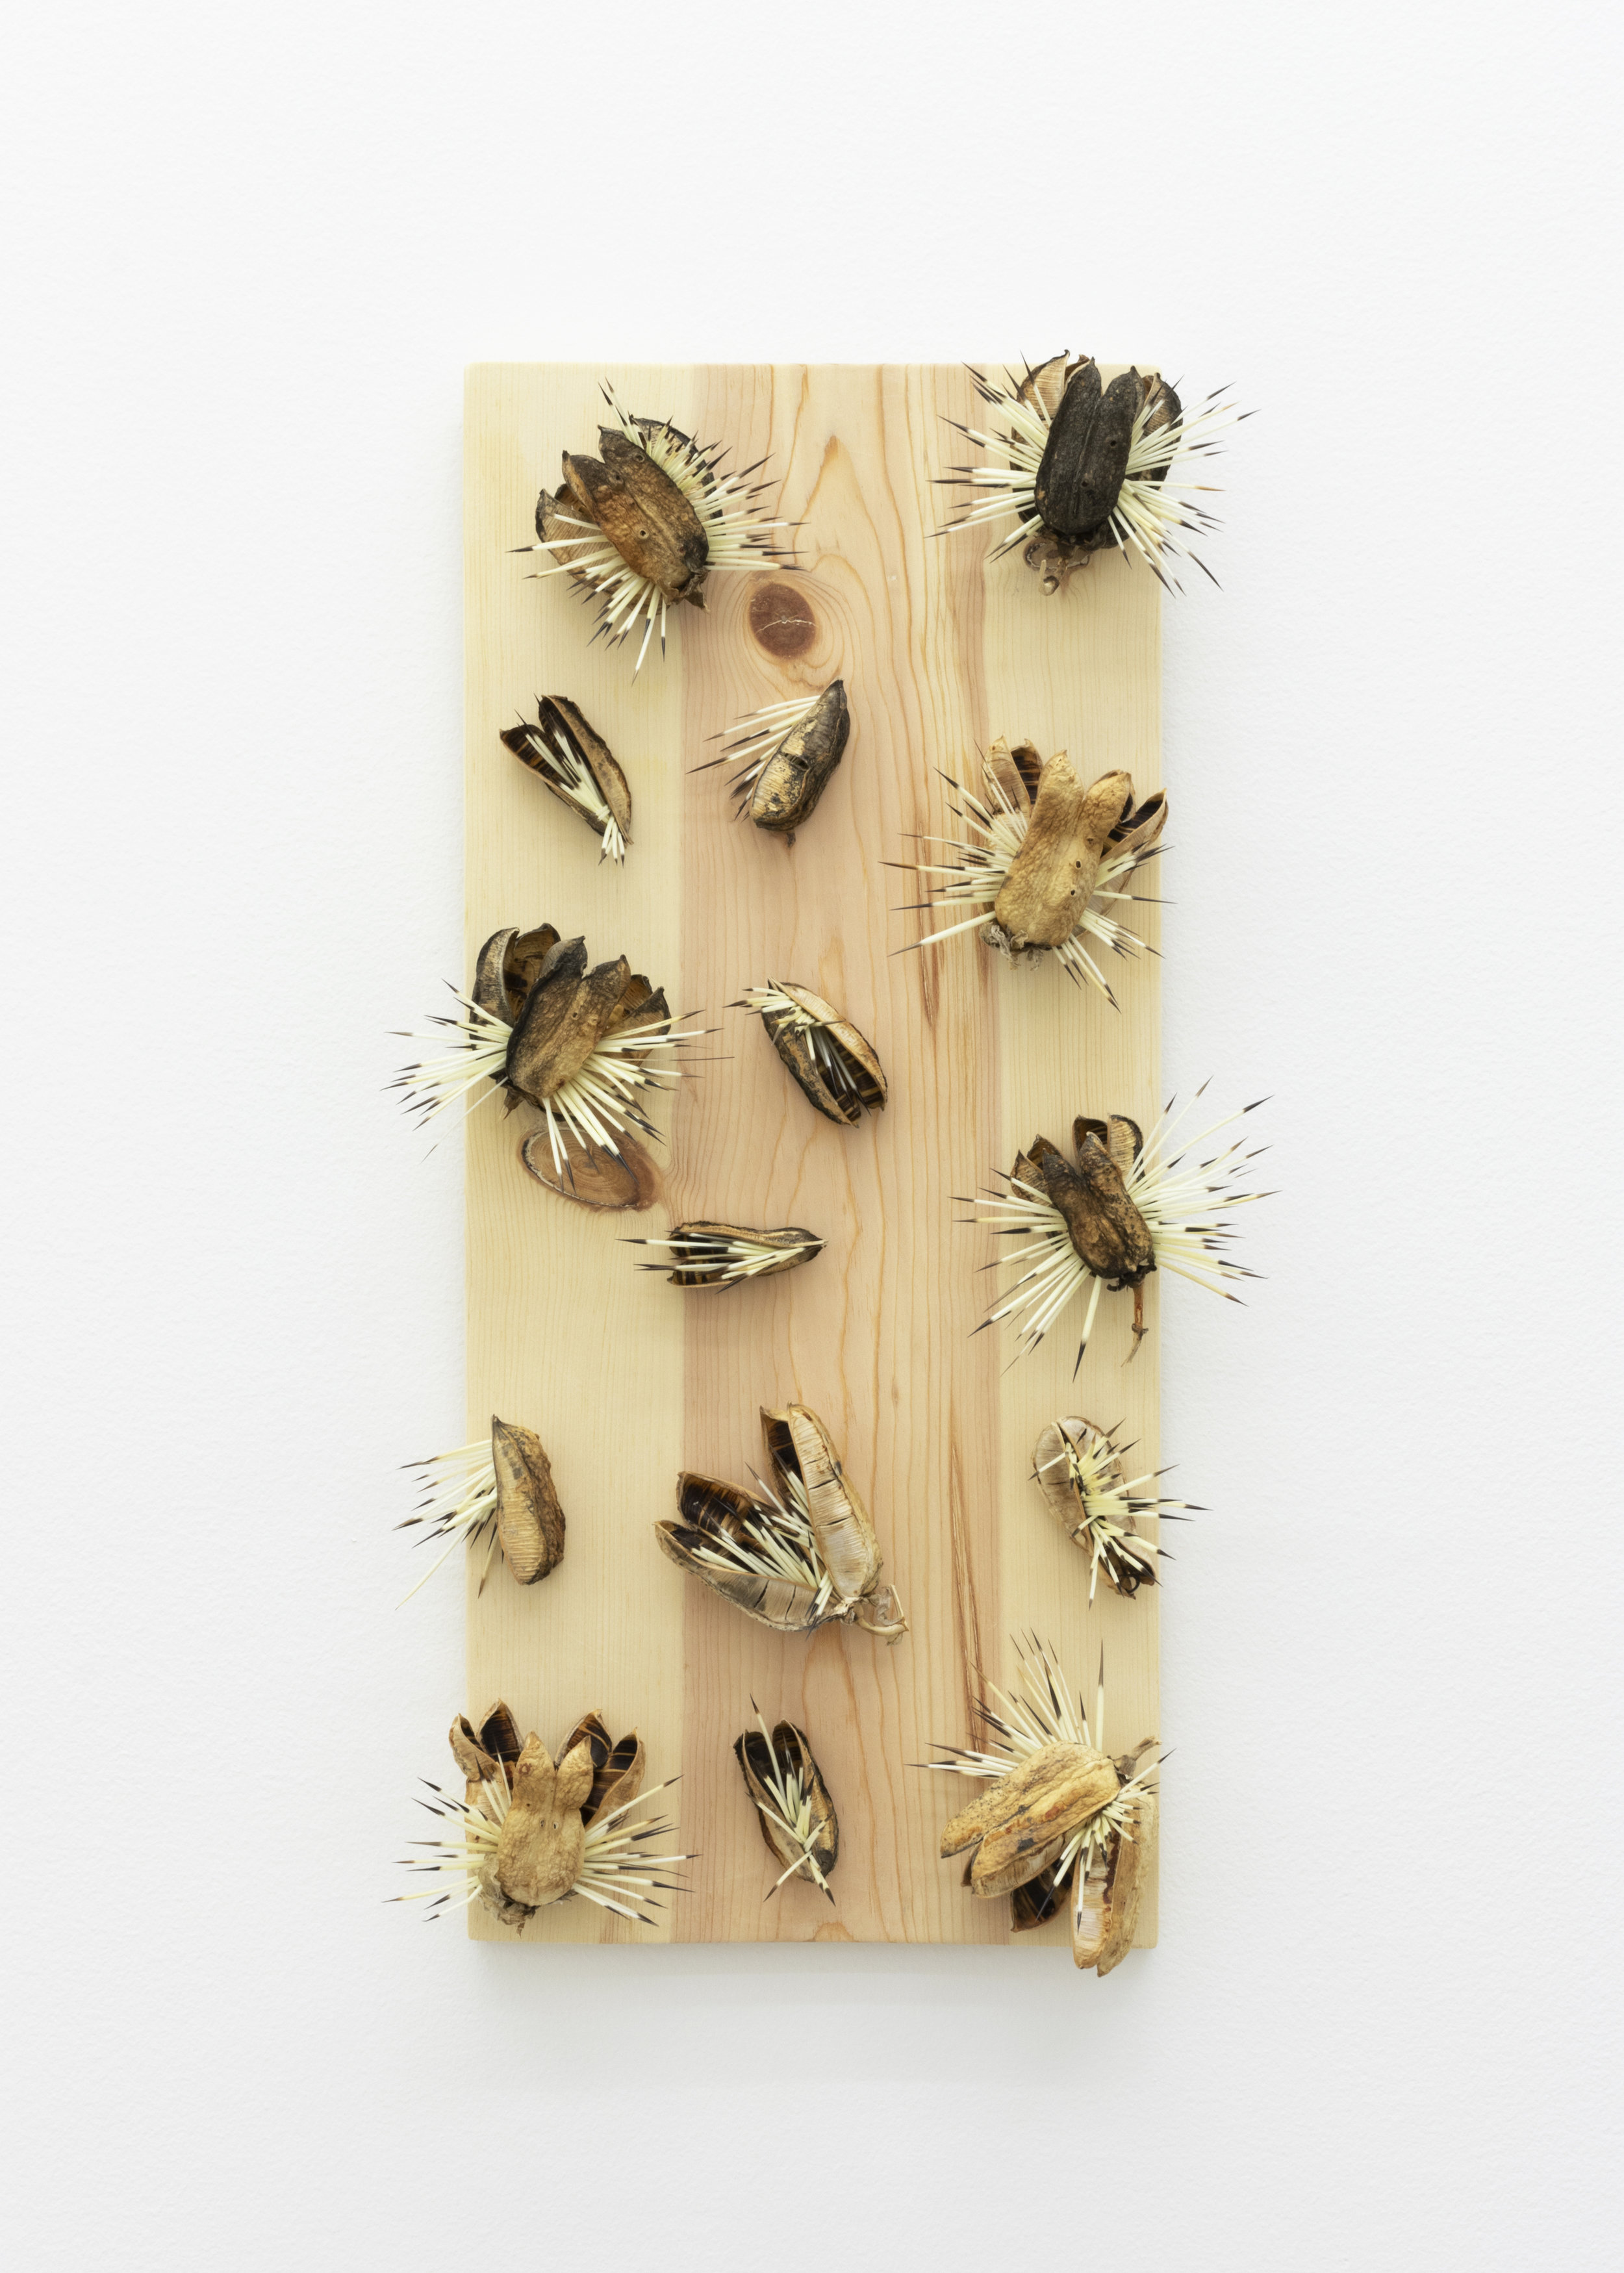   Haashk’aanz,  2019, porcupine quills, Rez wood, yucca fruit pods, 21 x 12 x 4 